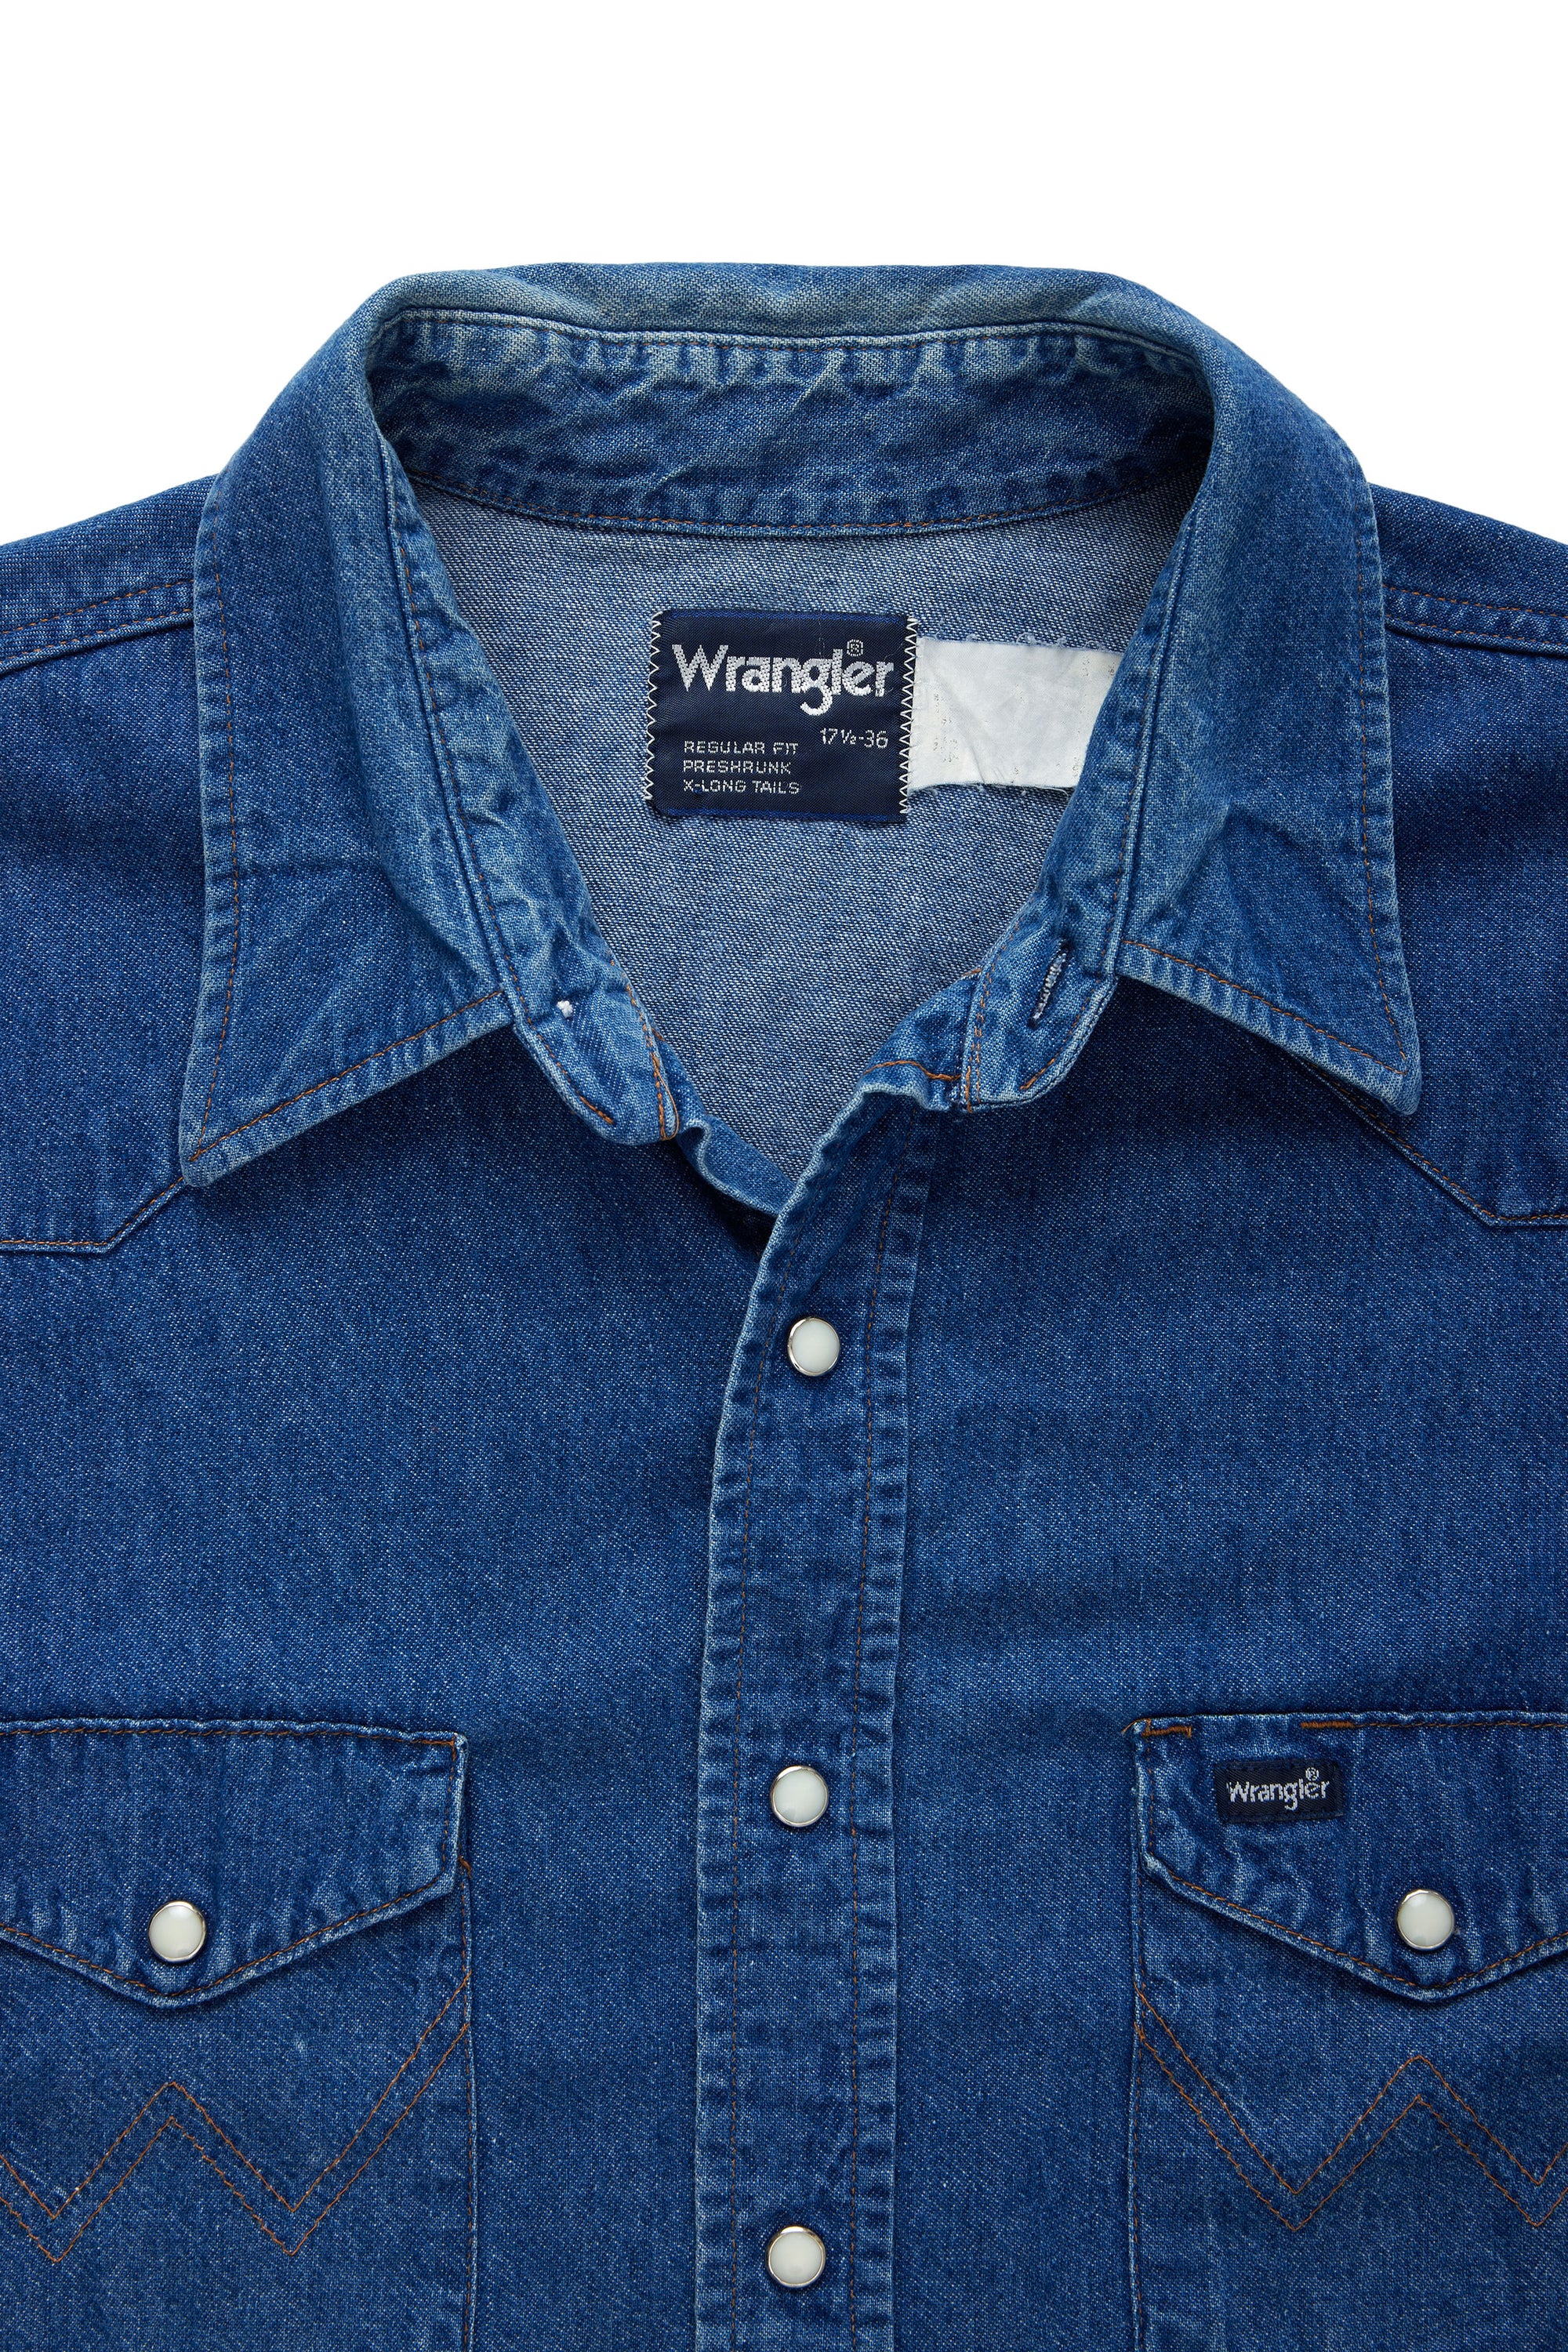 Vintage Wrangler Denim Western Shirt